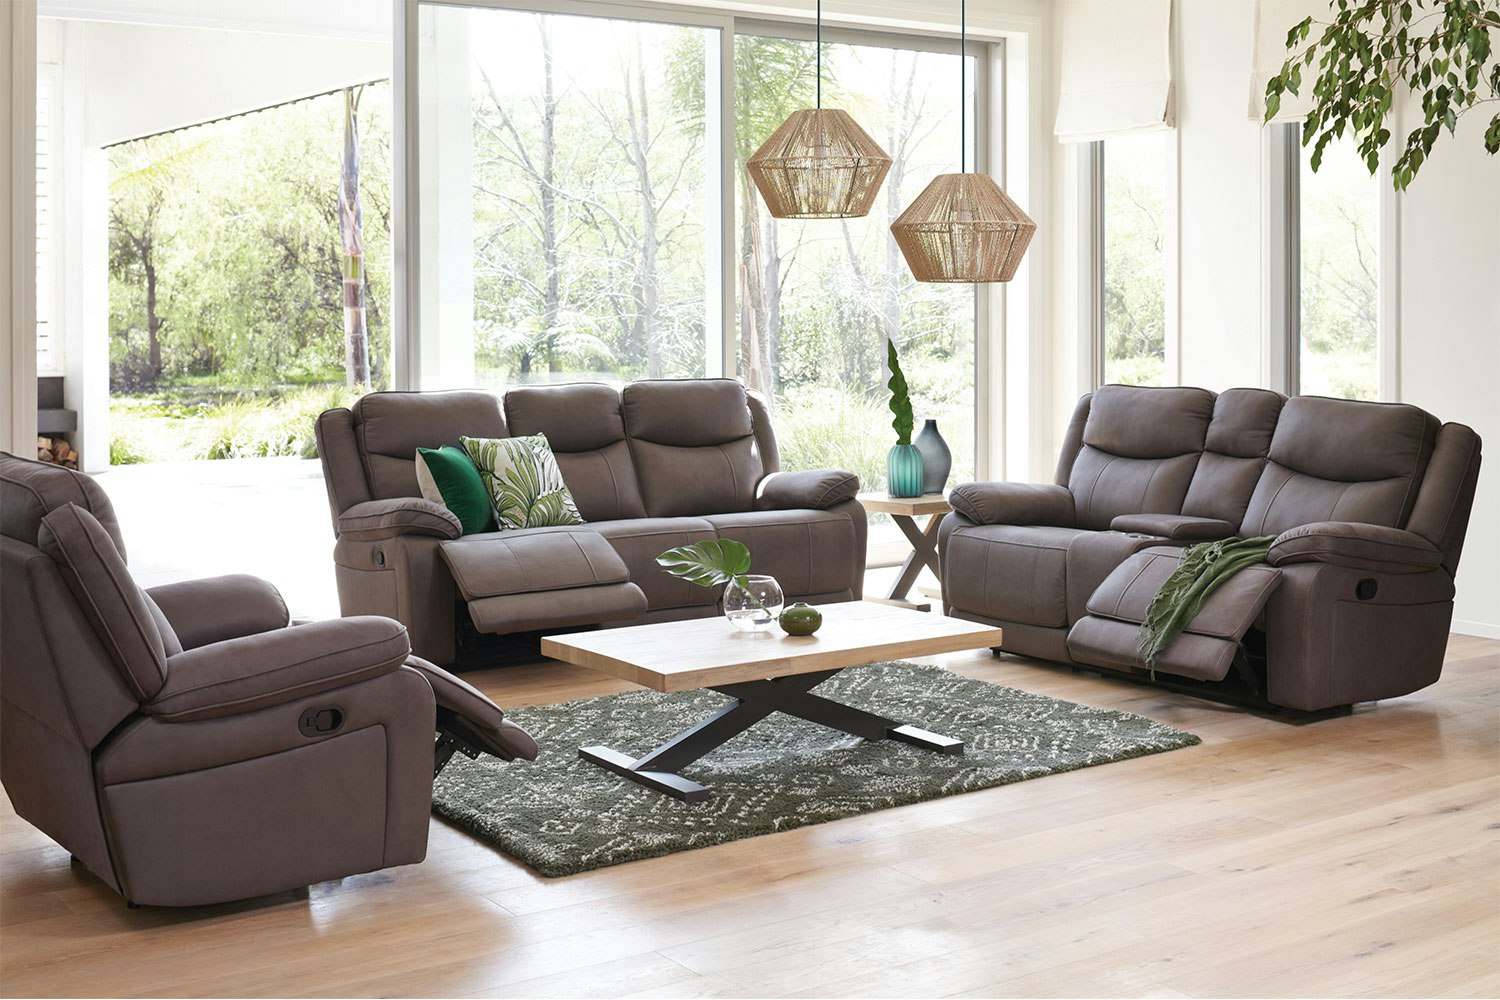 Https Wwwharveynormanconz Furniture Lounge Recliner Lounge Suites Pembroke 3 Piece Fabric Lounge Suitehtml